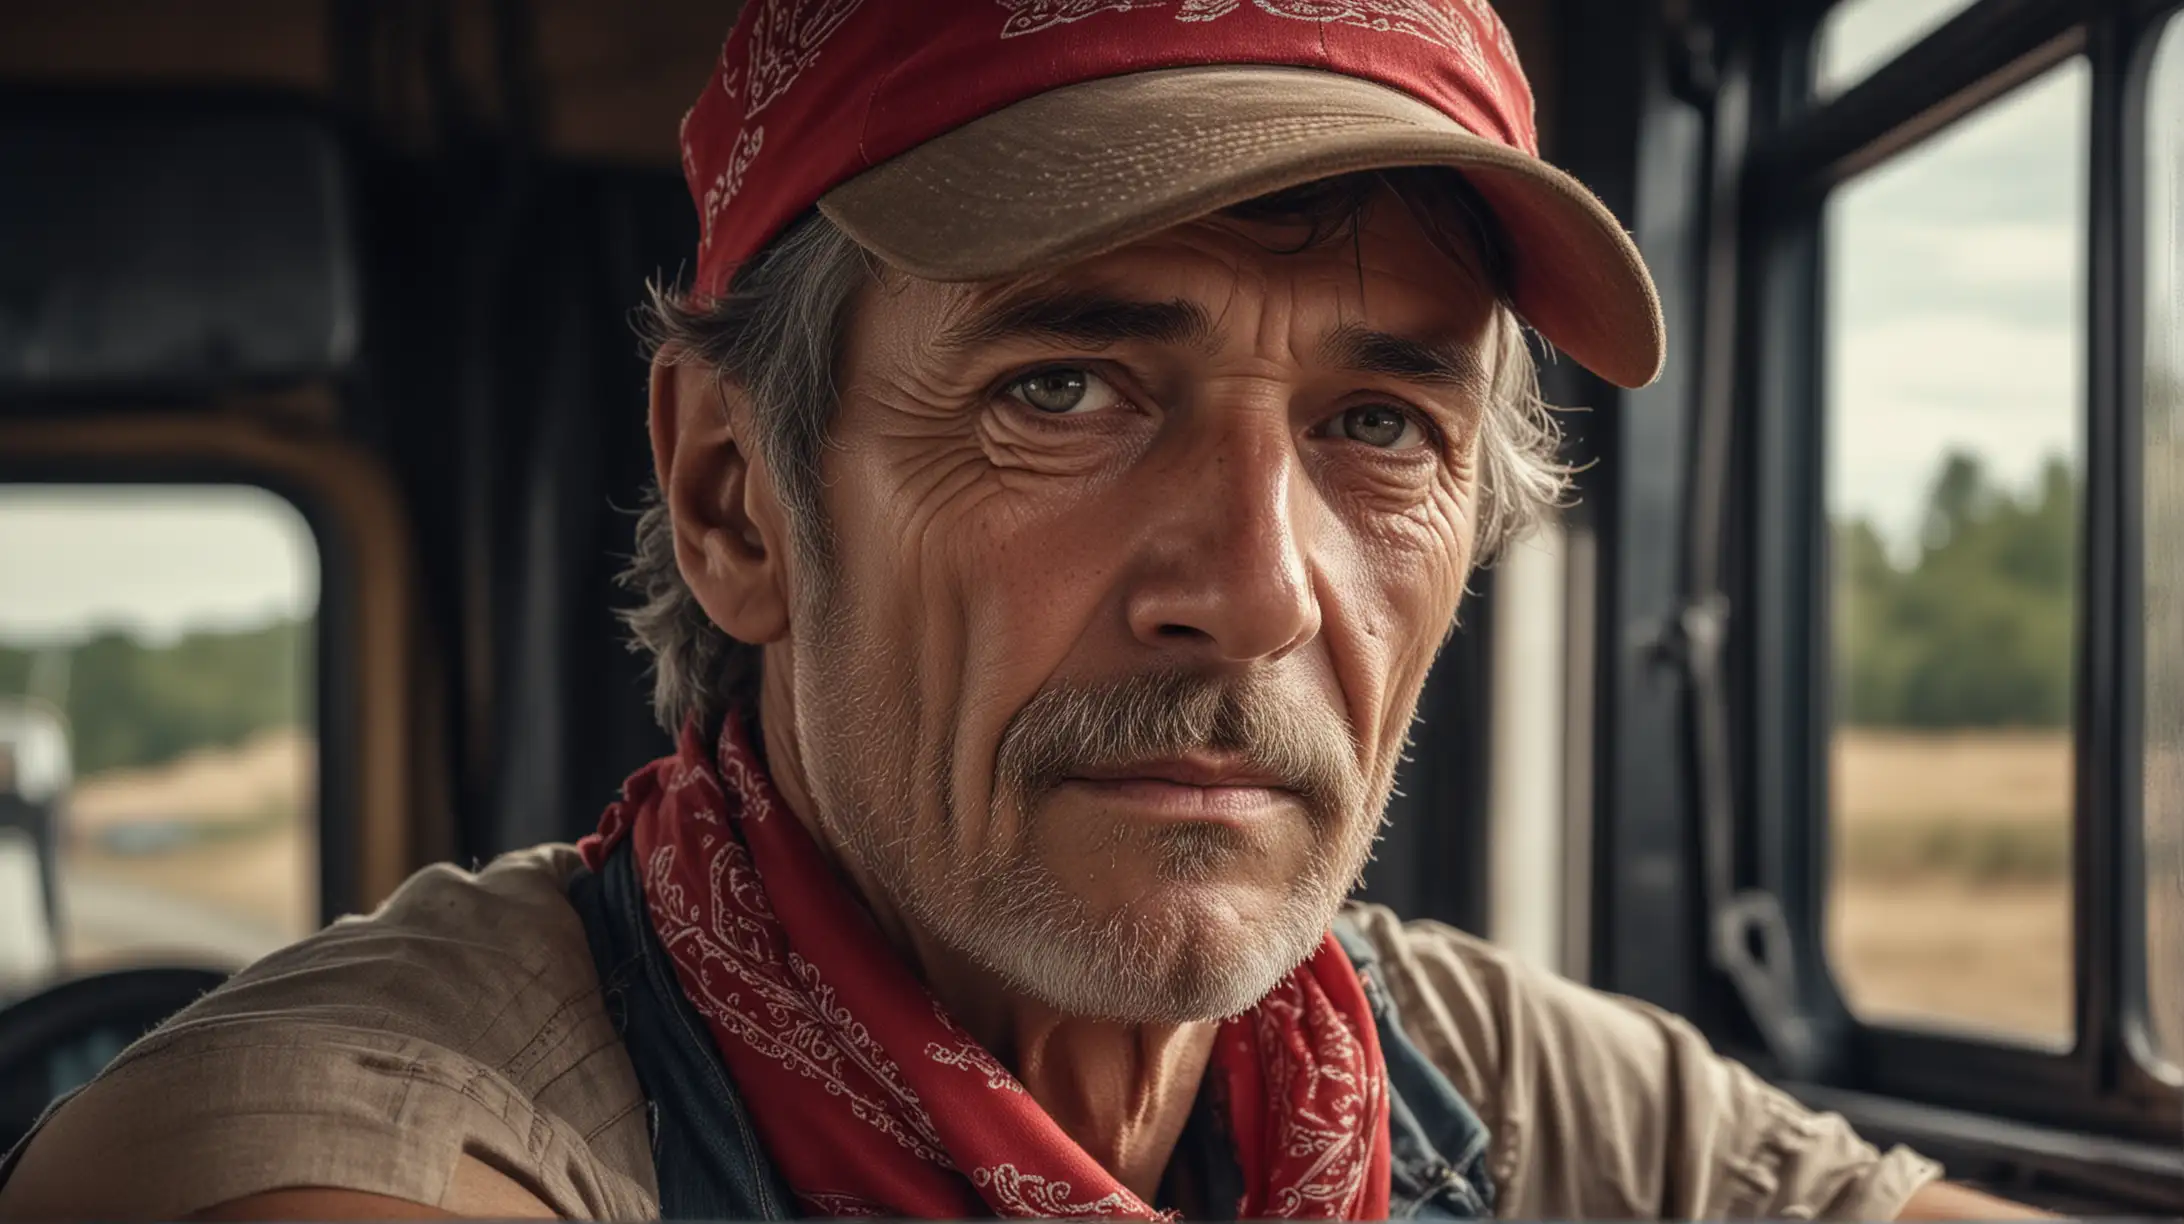 Everyman Truck Driver Portrait Aging Man in Red Bandana Inside 18Wheeler Cab